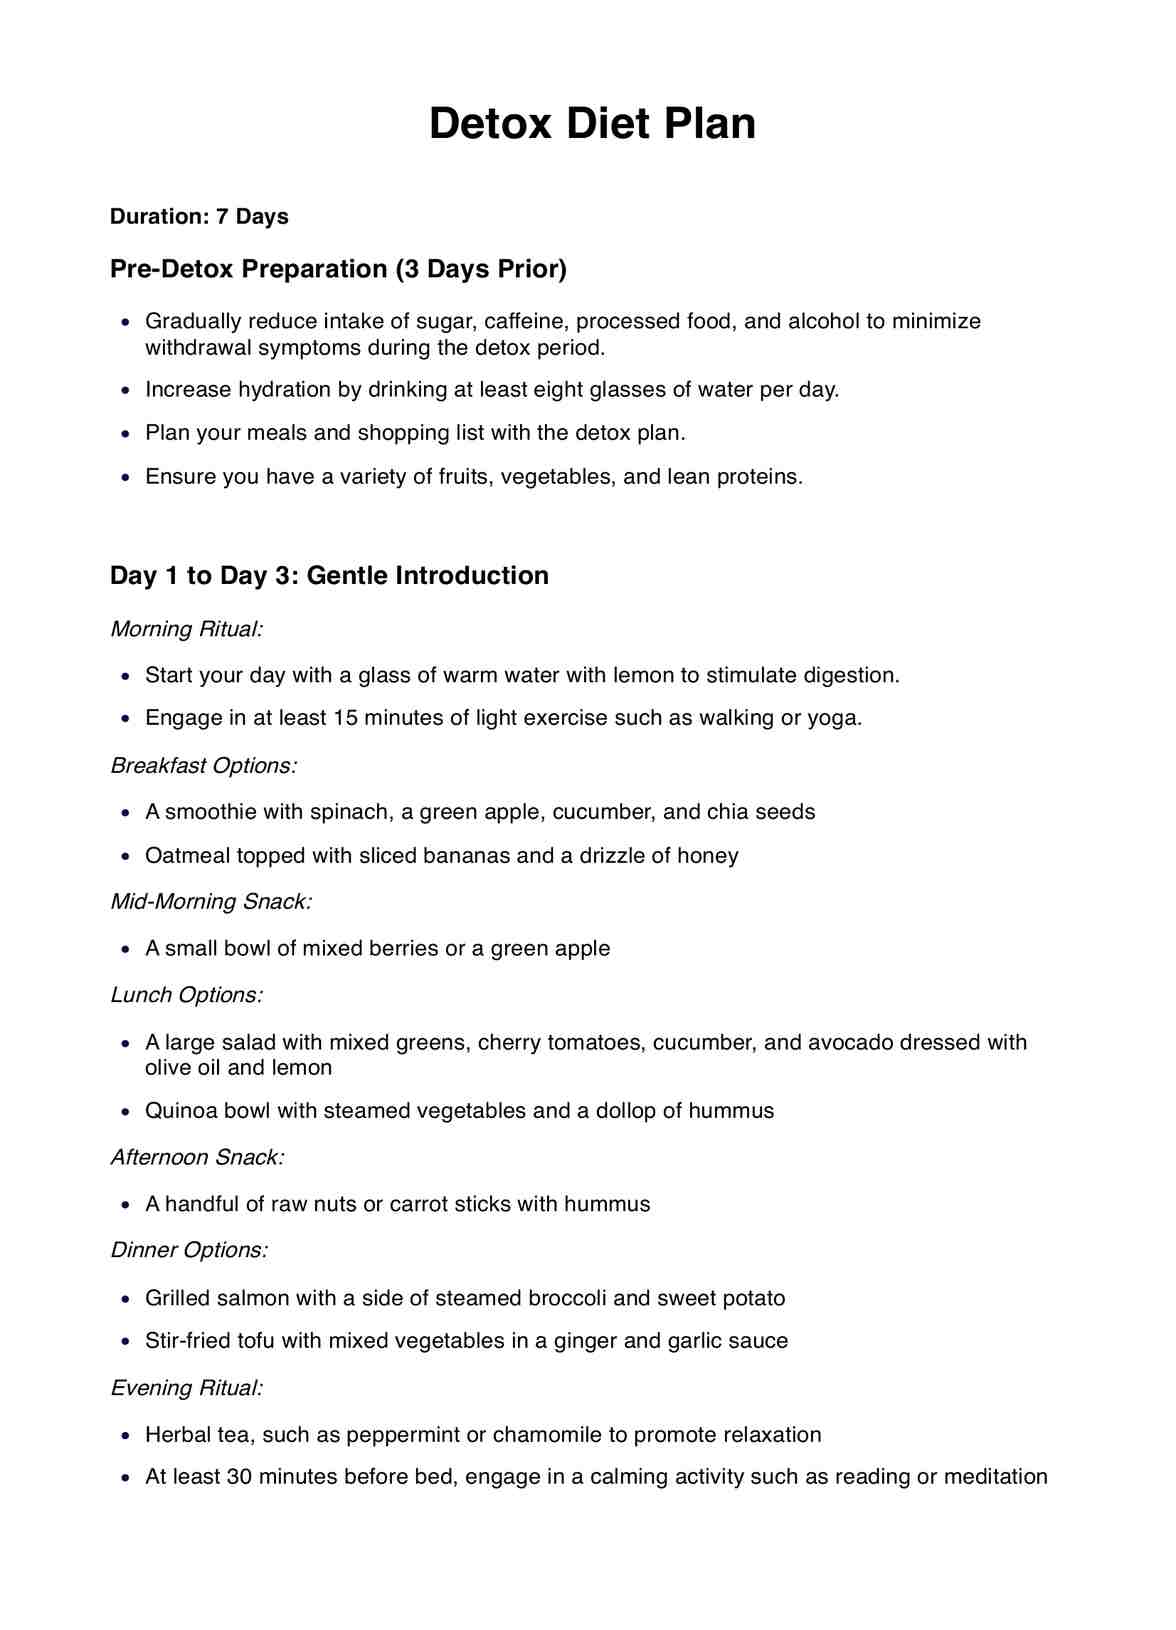 Detox Diet PDF Example